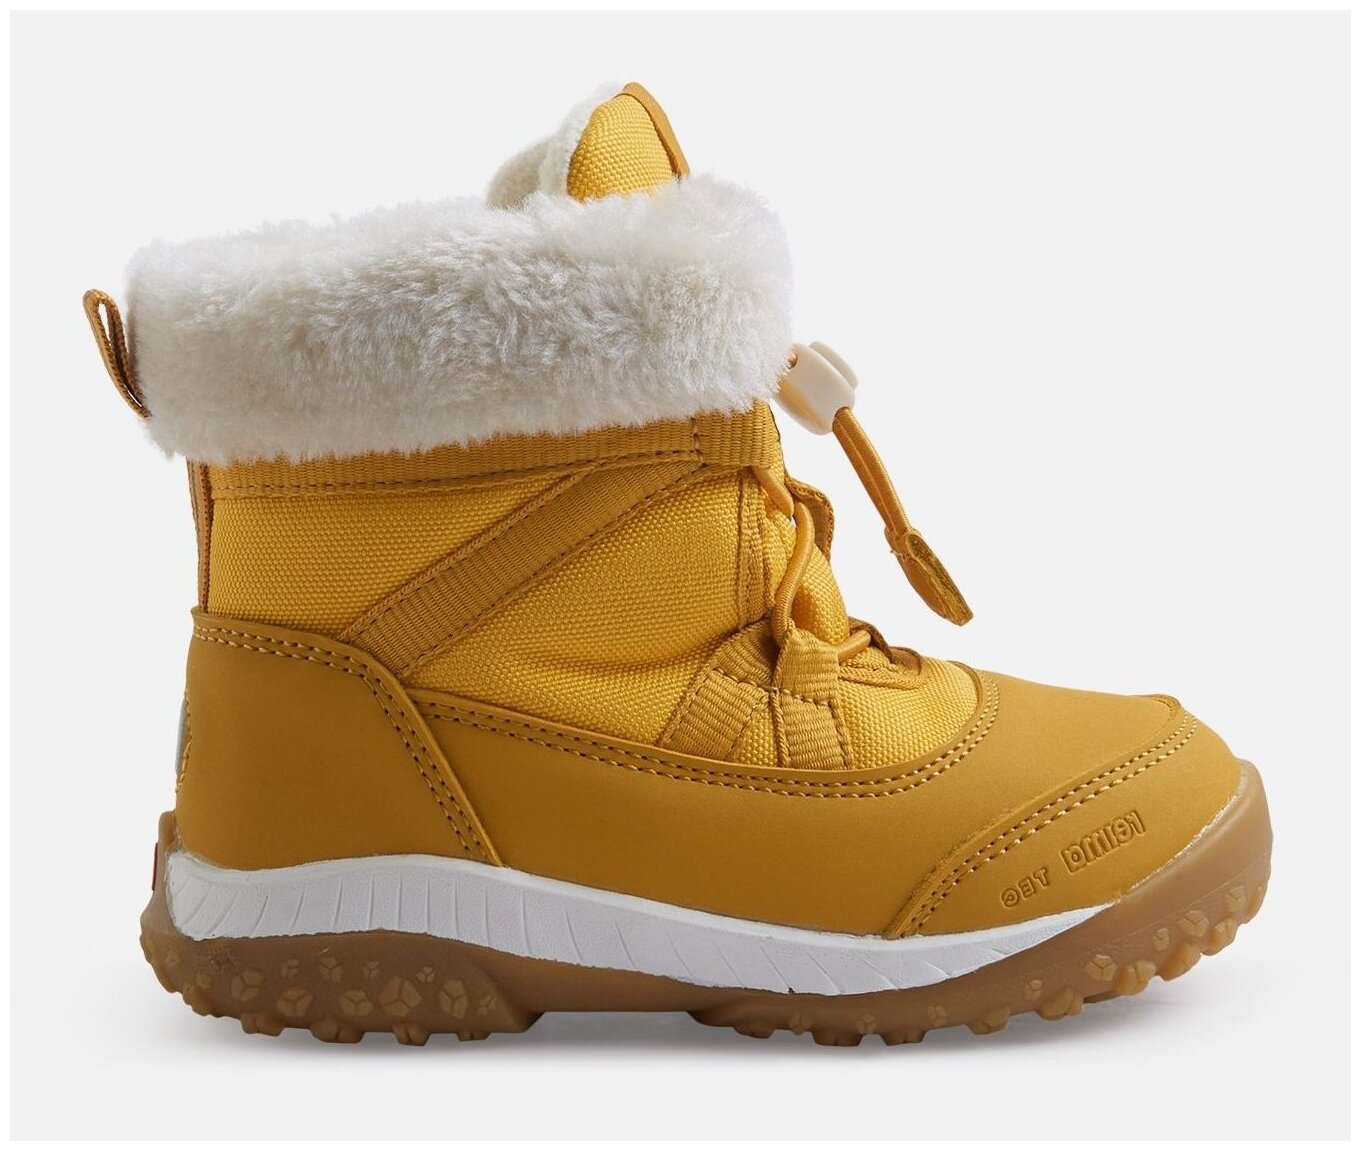 Ботинки Reima Samooja, размер 28, желтый — купить в интернет-магазине понизкой цене на Яндекс Маркете